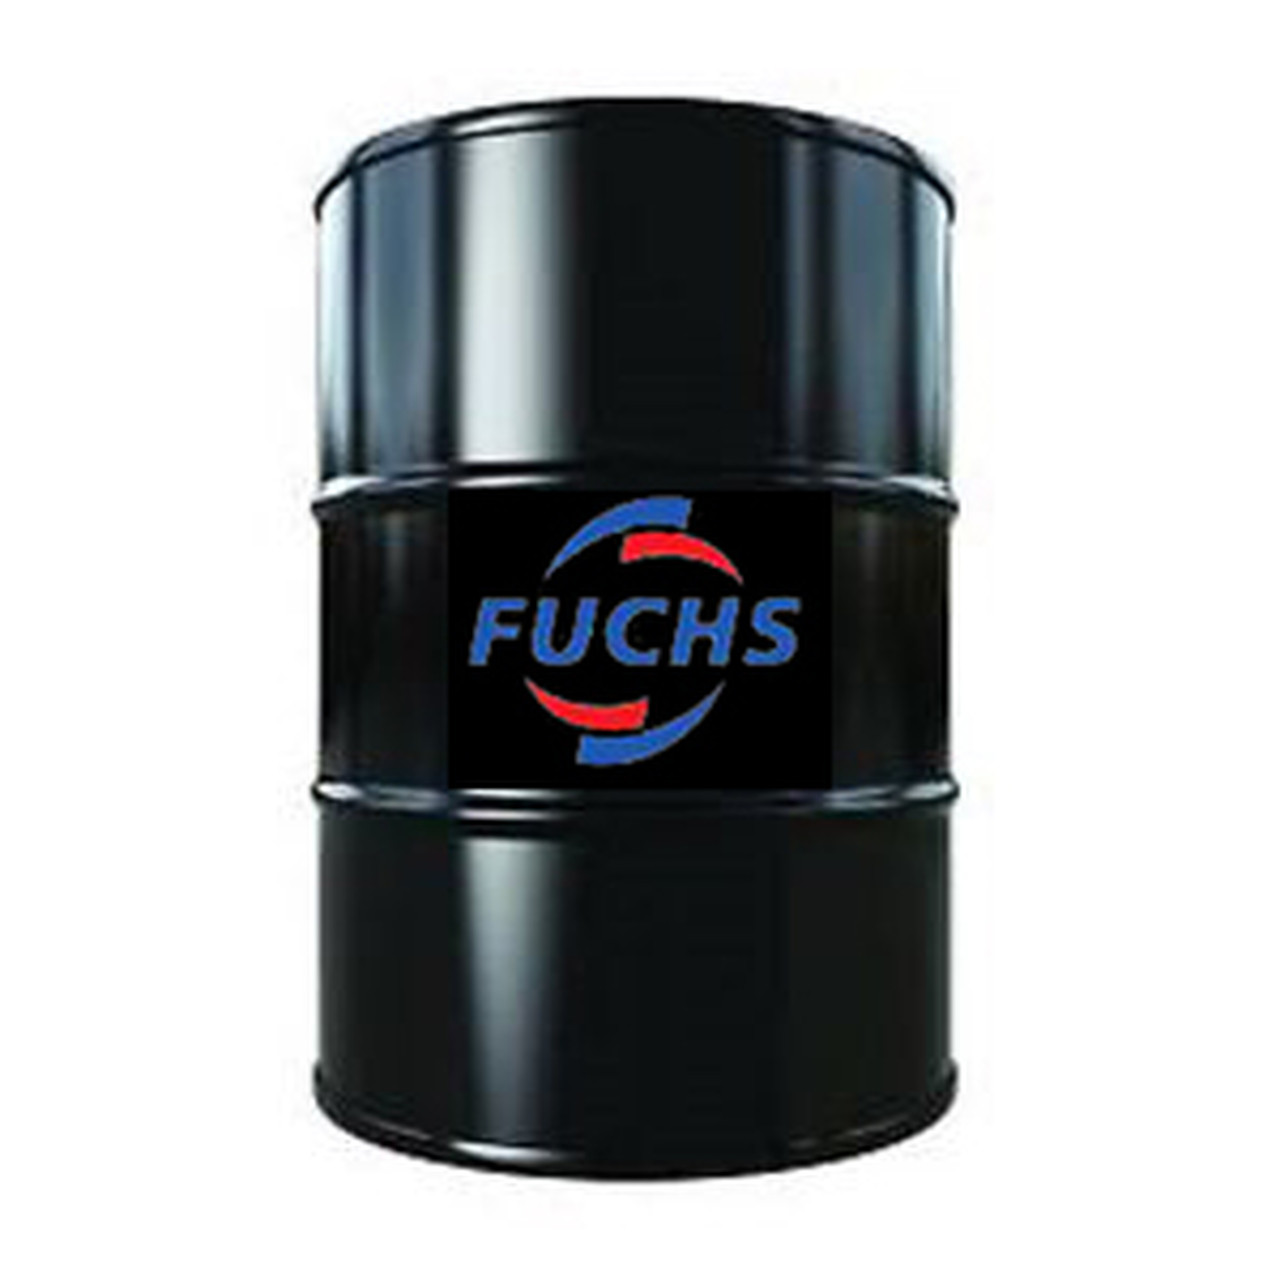 Fuchs FM Gear Oil 460 -  55 Gallon Drum